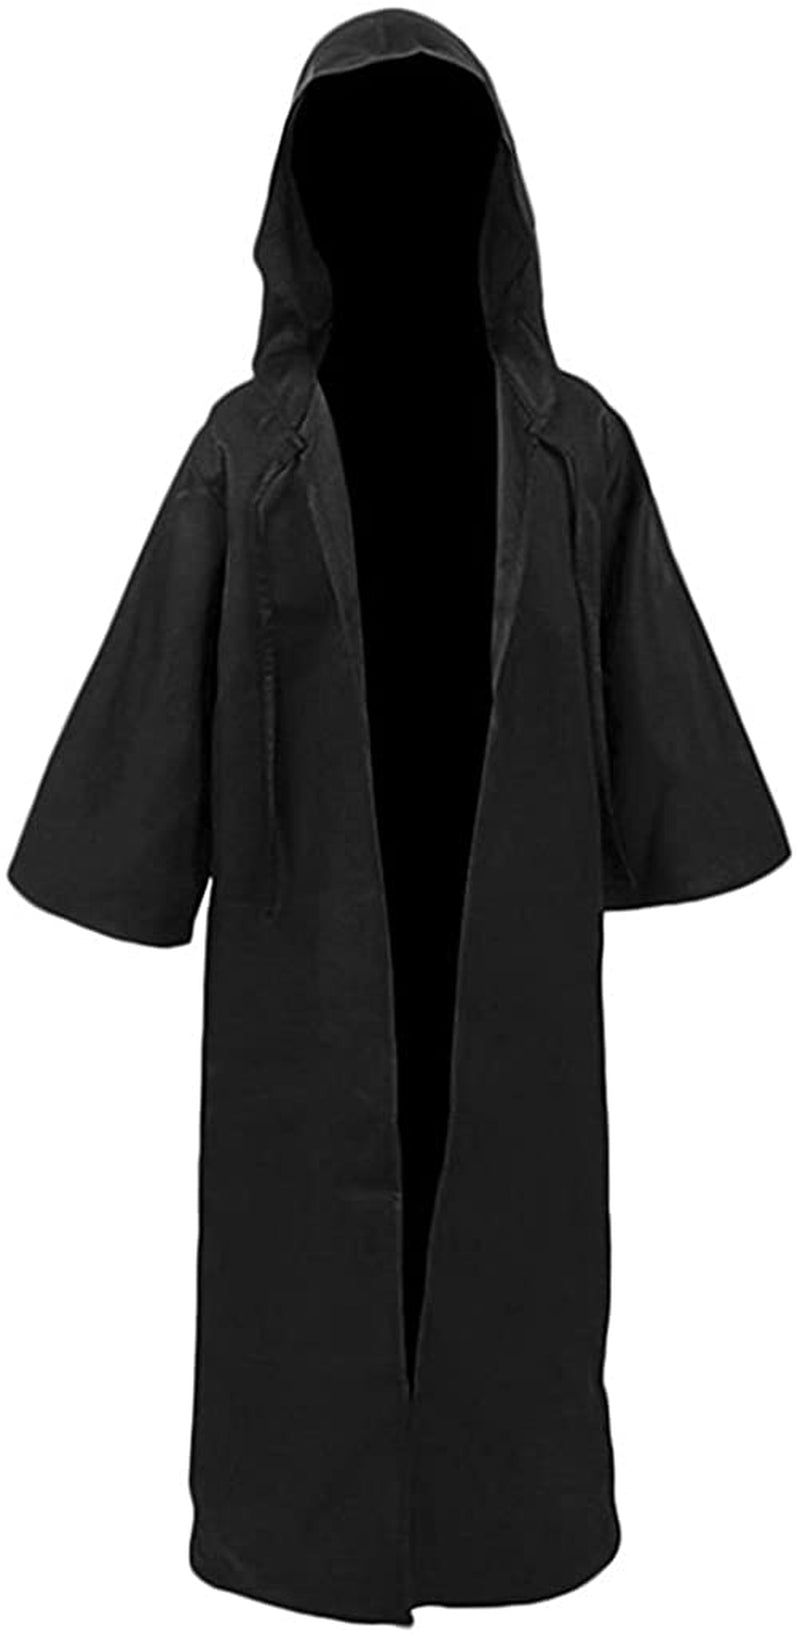 JOYSHOP Men & Kids Tunic Hooded Robe Halloween Cosplay Costume Robe Cloak Cape  JOYSHOP Kids Black Medium 